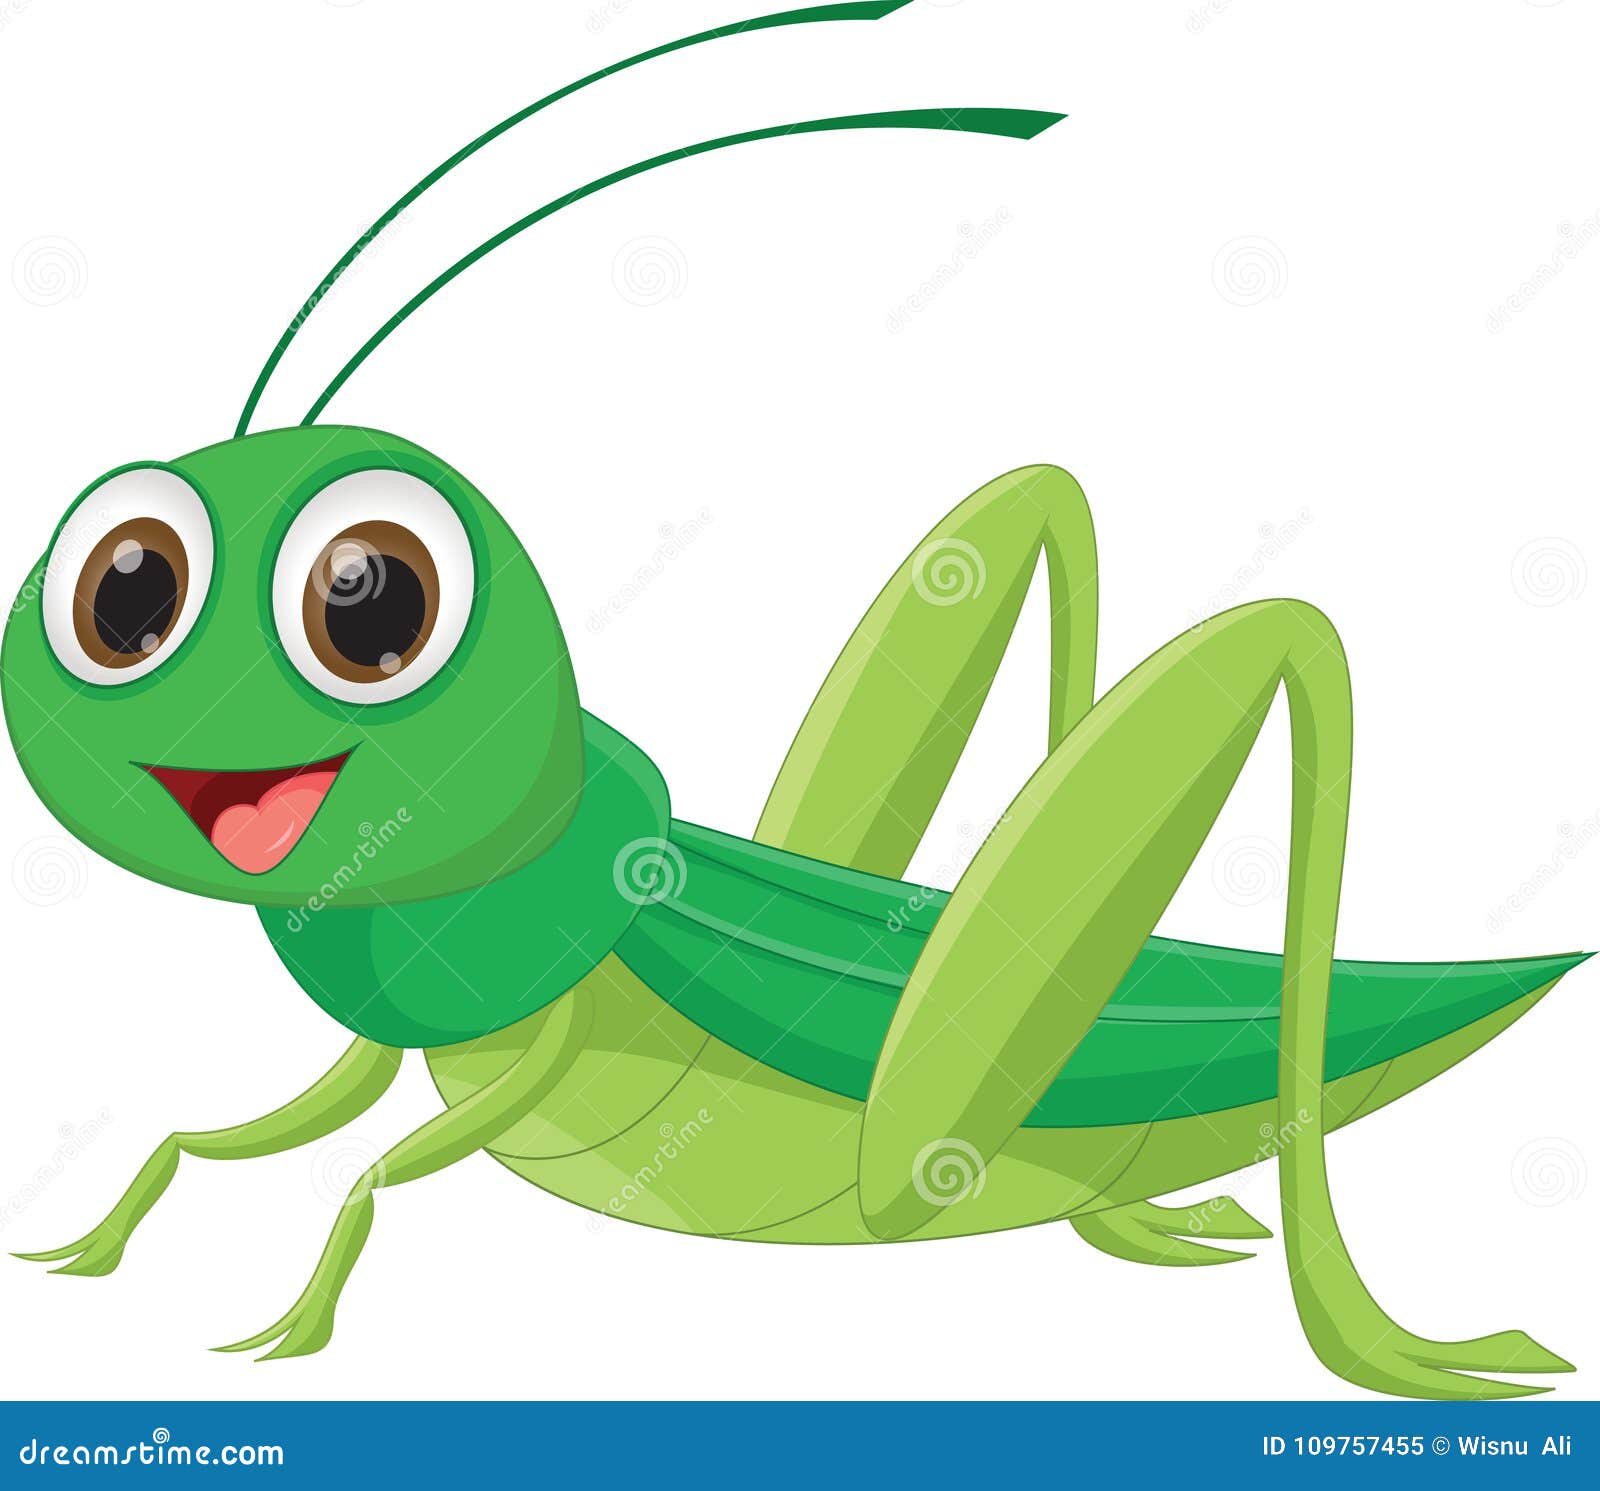 Grasshopper Drawing - HelloArtsy